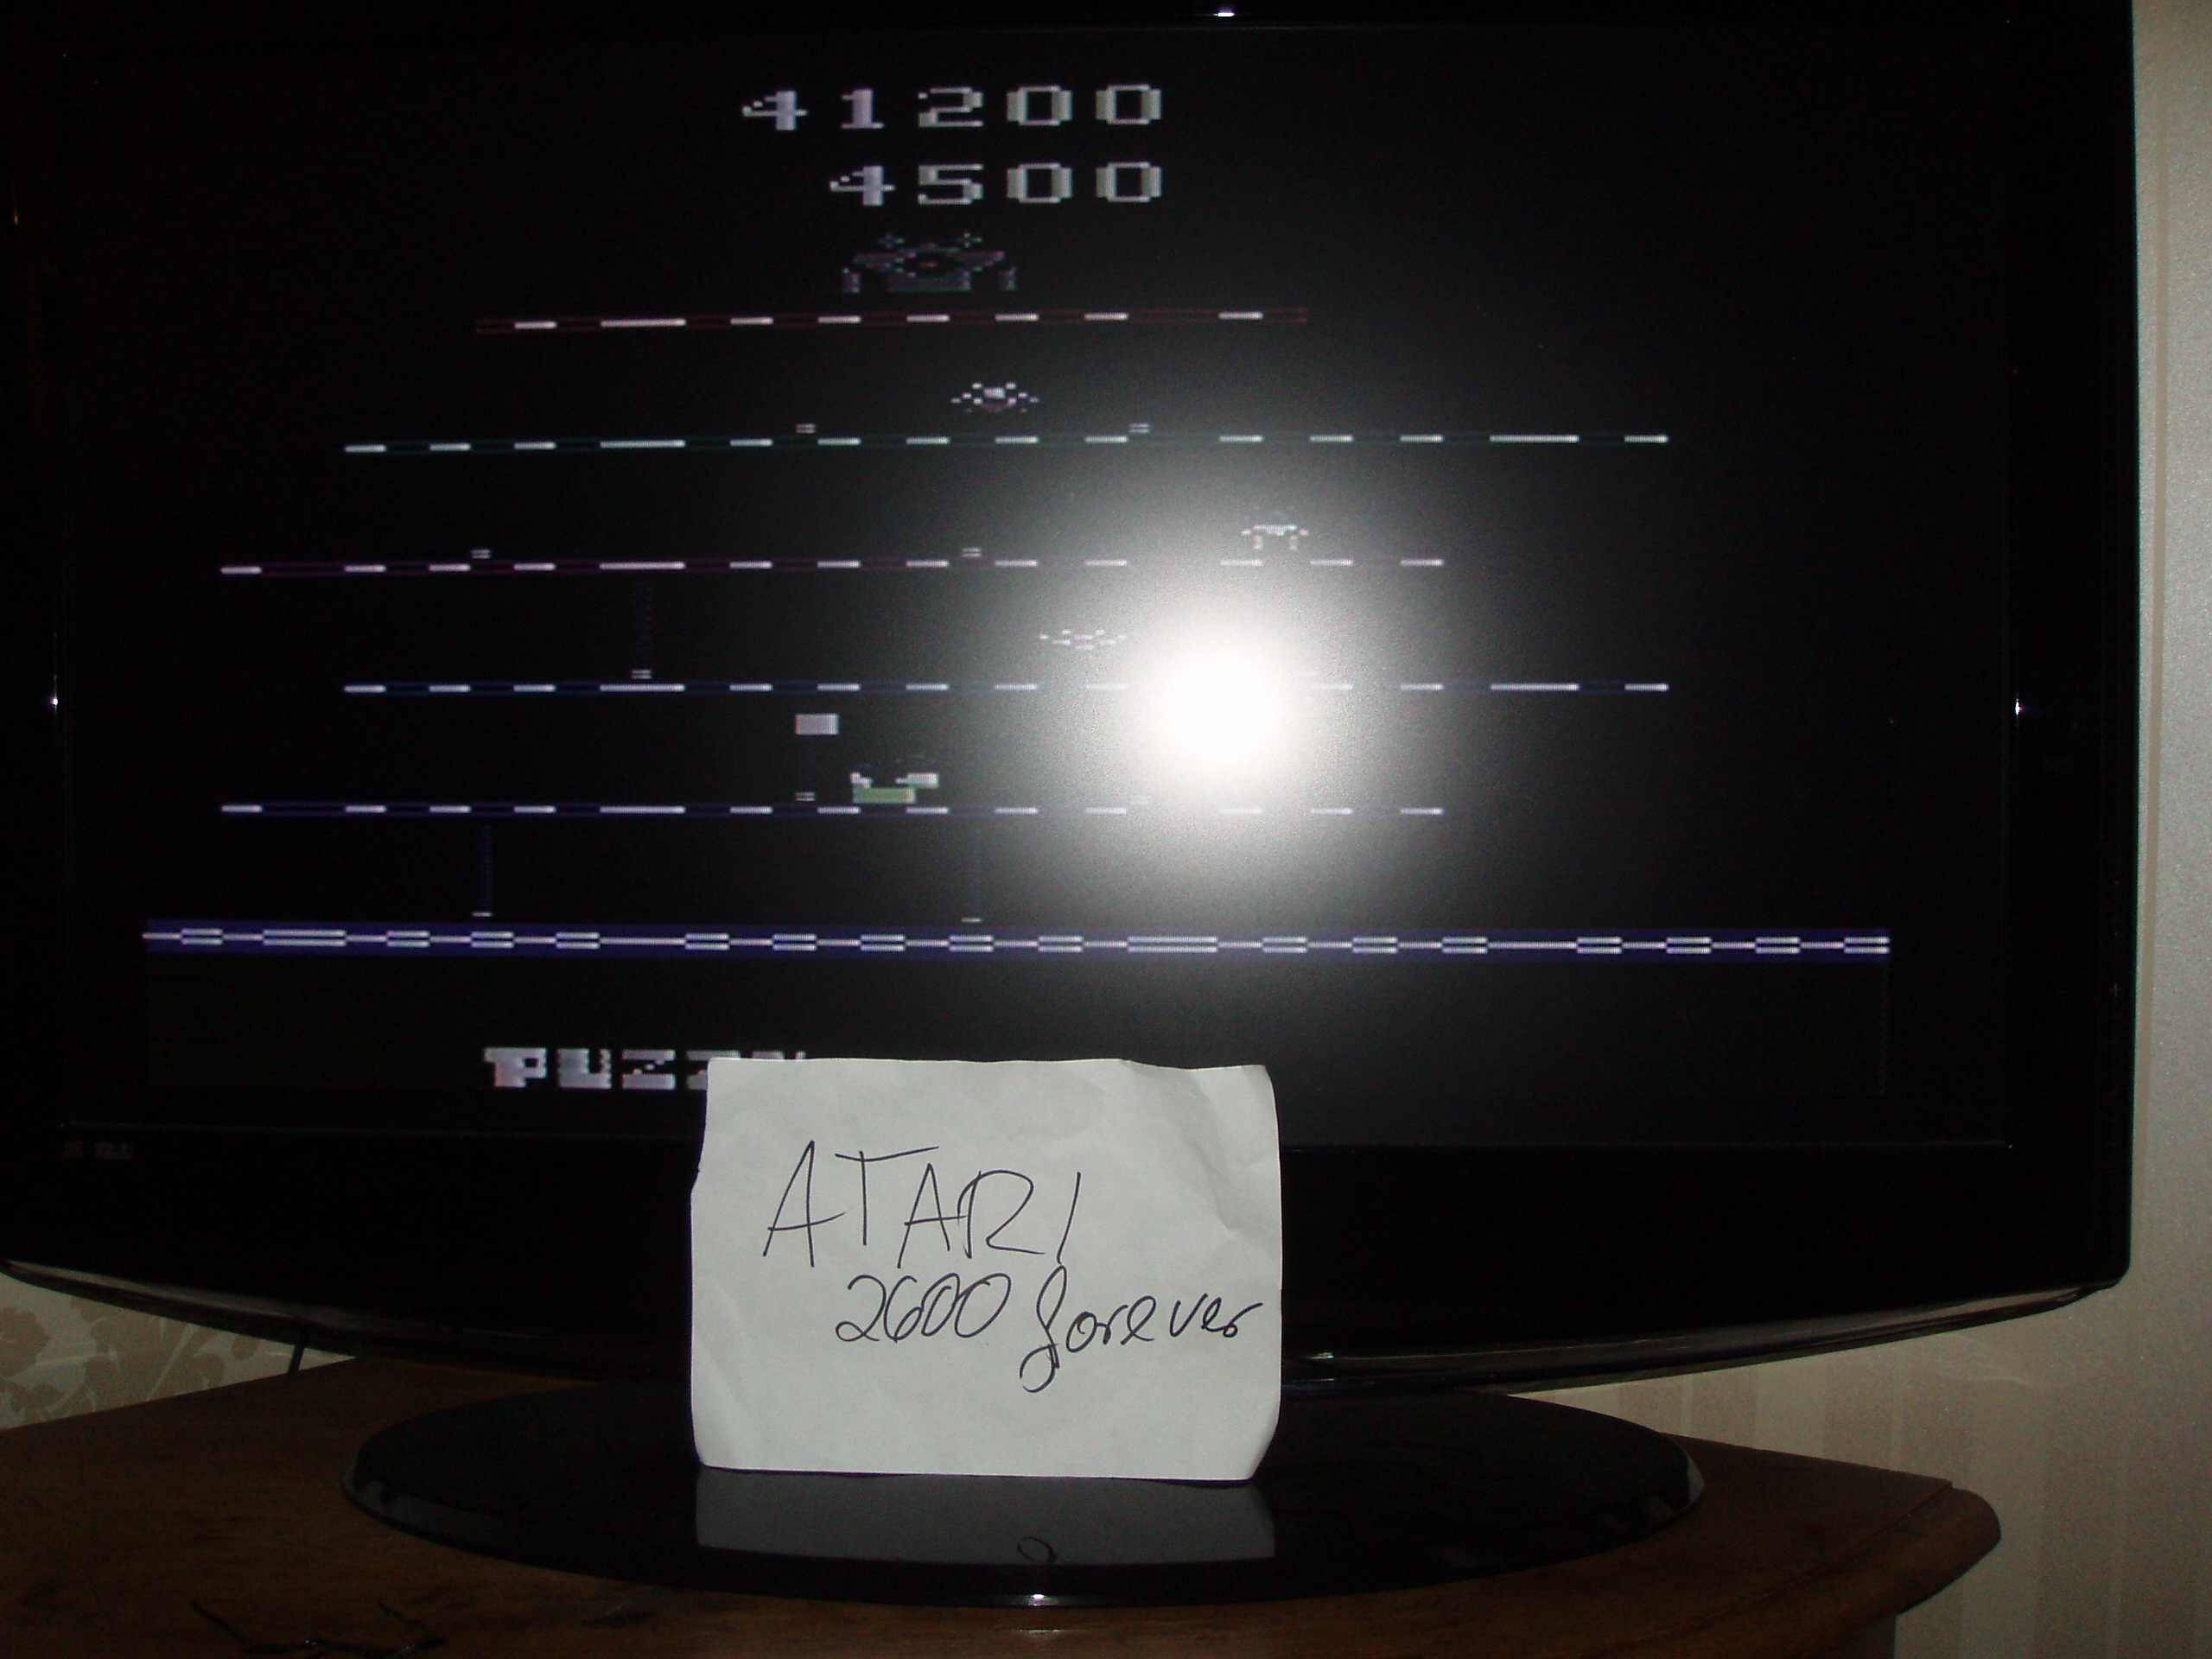 atari2600forever: Open Sesame (Atari 2600) 41,200 points on 2018-11-24 03:44:12